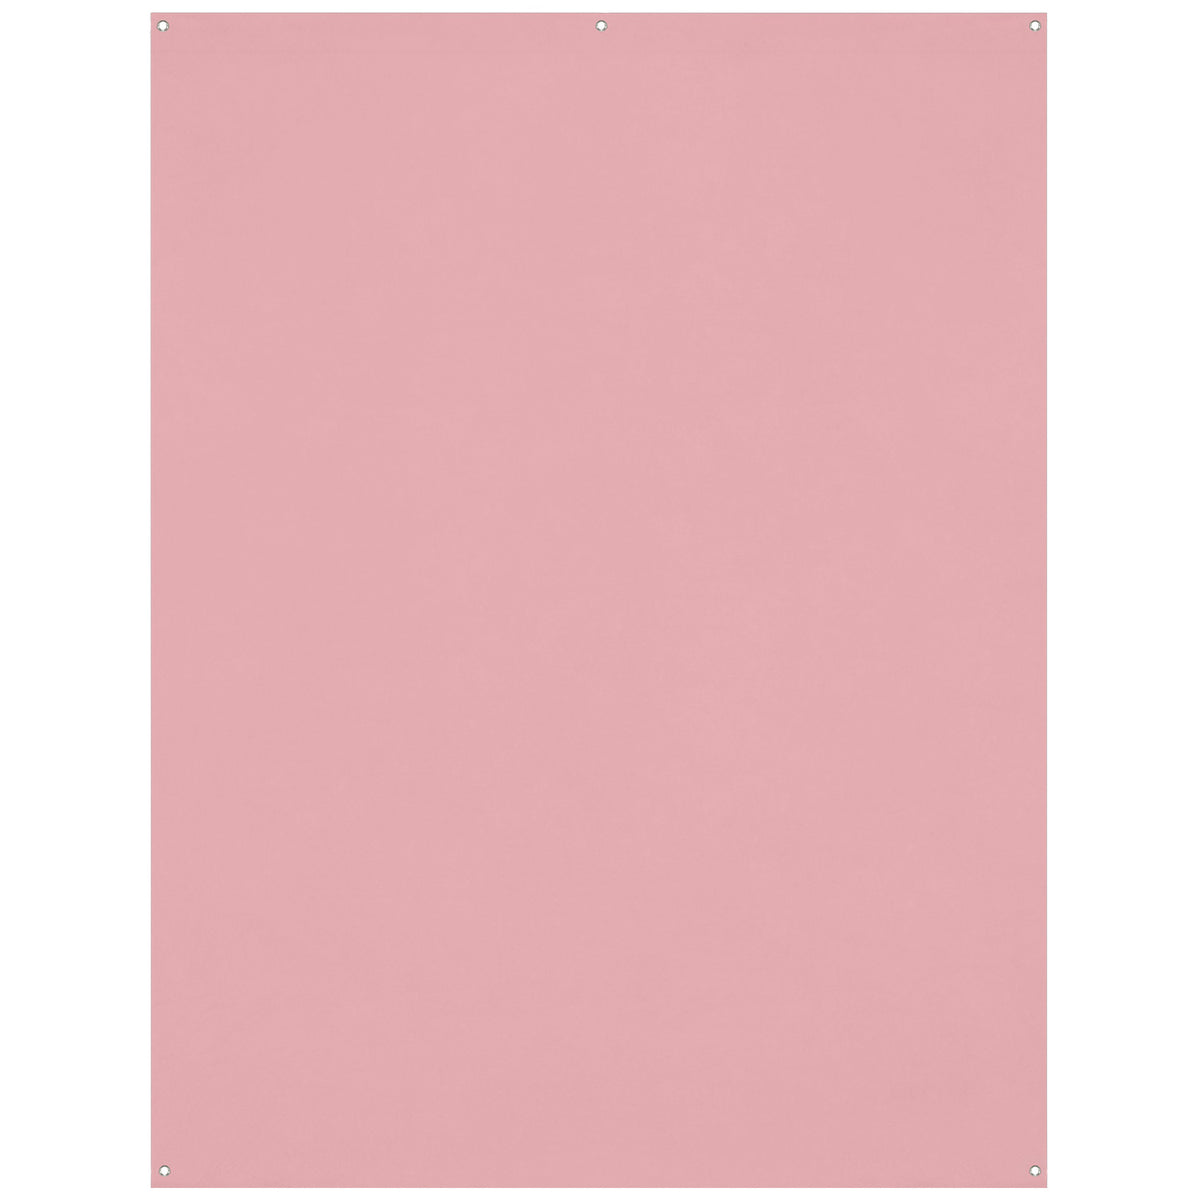 X-Drop Wrinkle-Resistant Backdrop - Blush Pink (5' x 7')